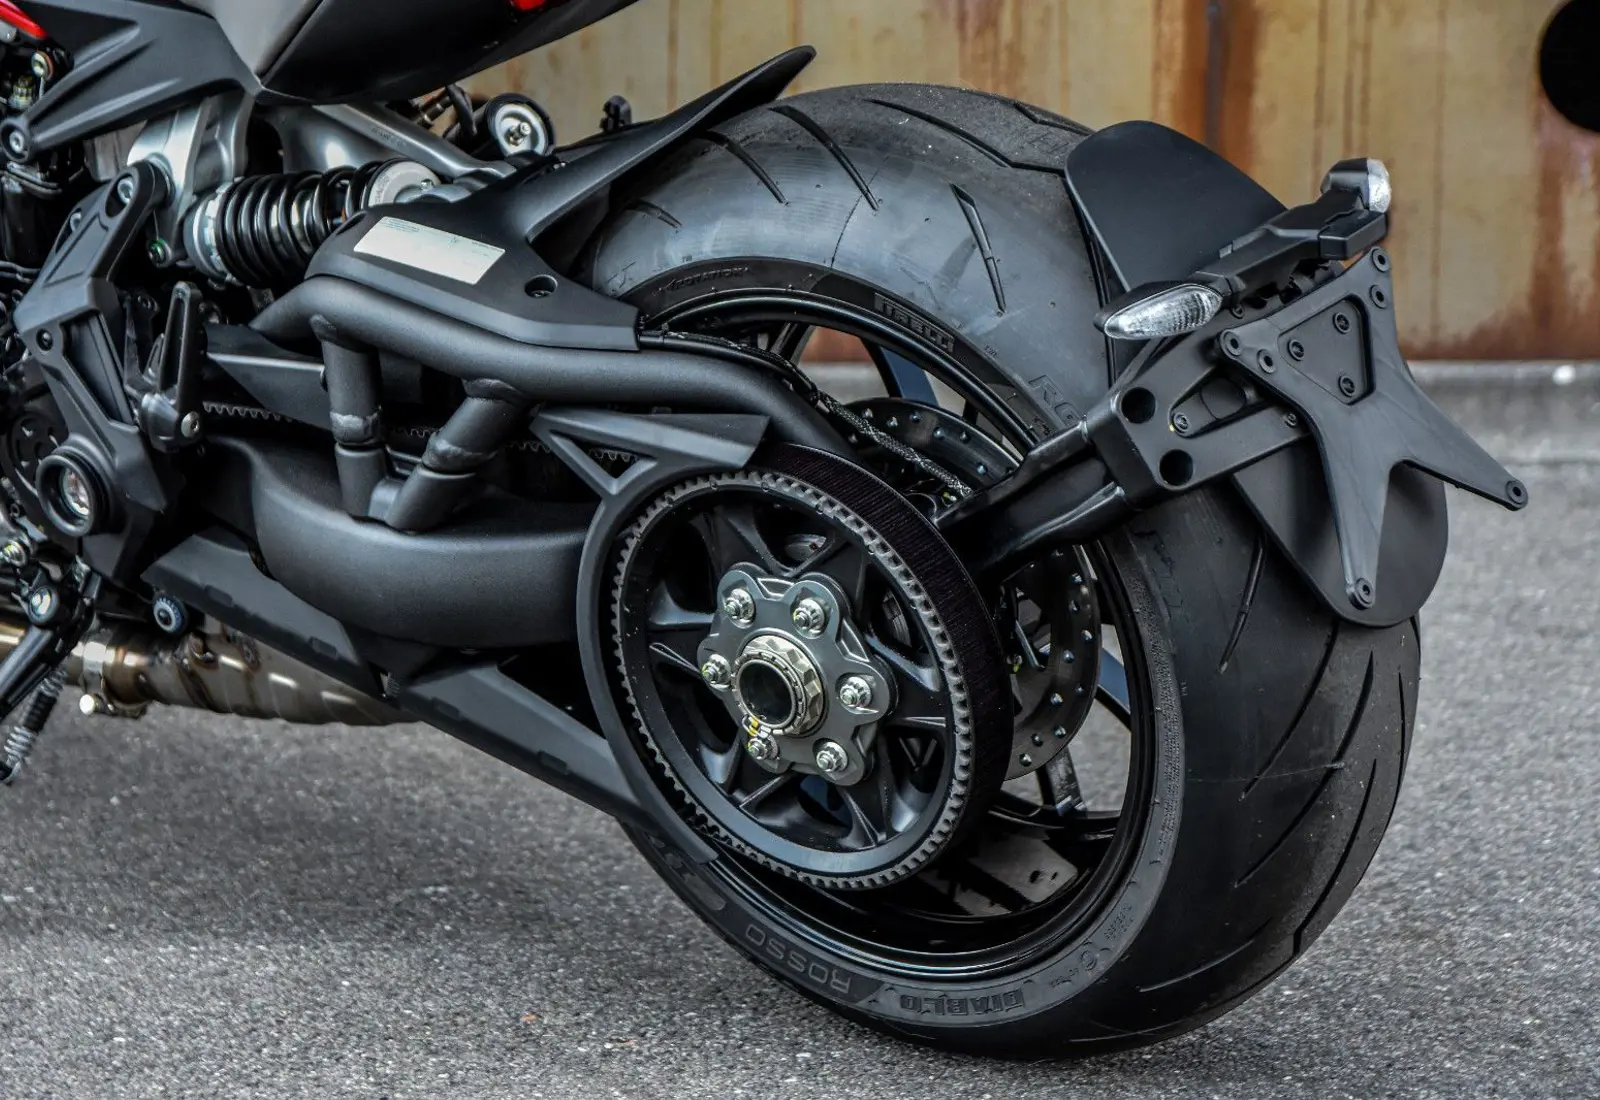 Ducati X-Diavel Nera * POLTRONA FRAU * 1 OF 500 * LIMITED ED - 44504